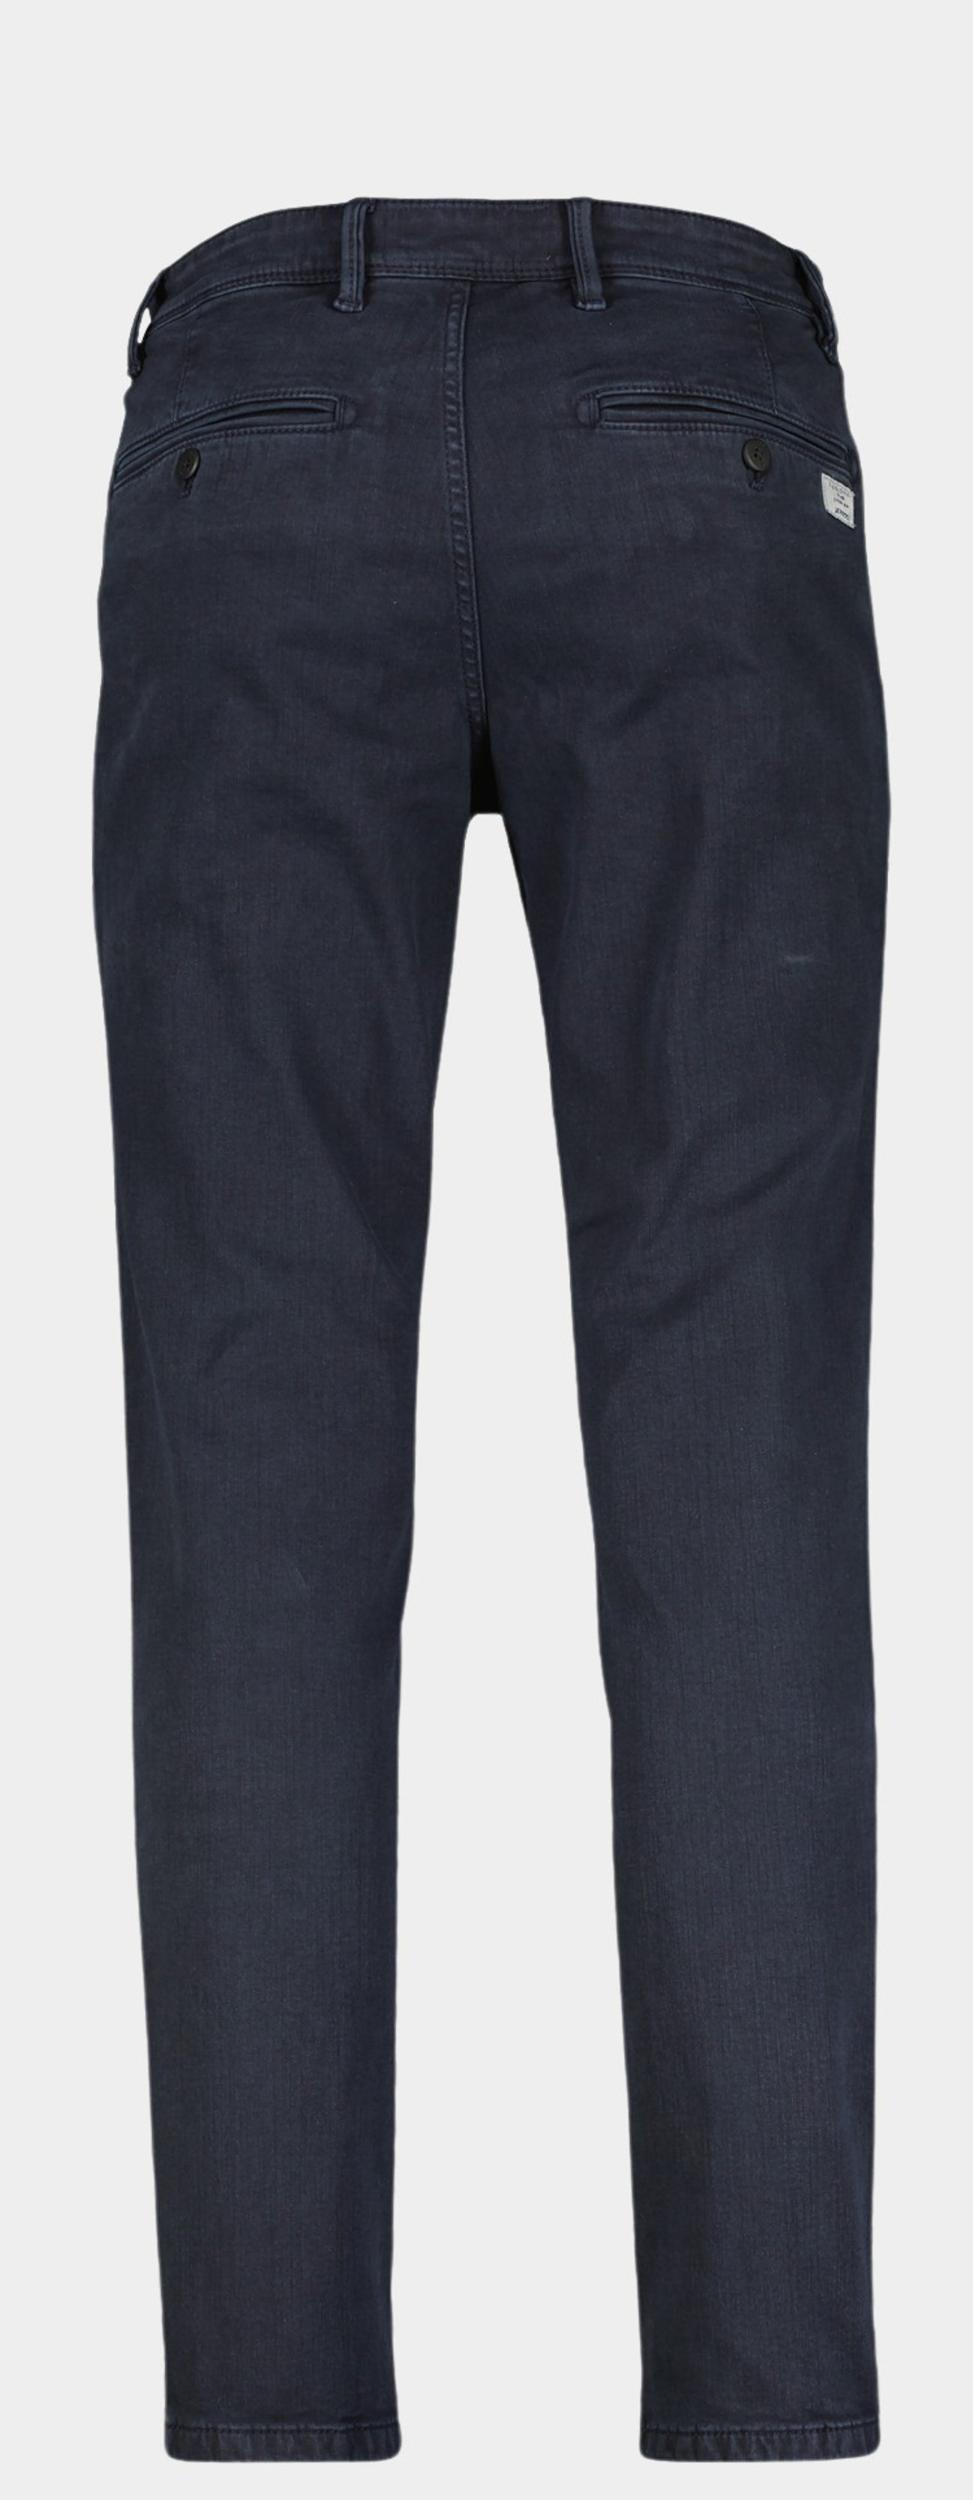 Lerros 5-Pocket Jeans Blauw HOSE LANG 2429114/485 CLASSIC NAVY